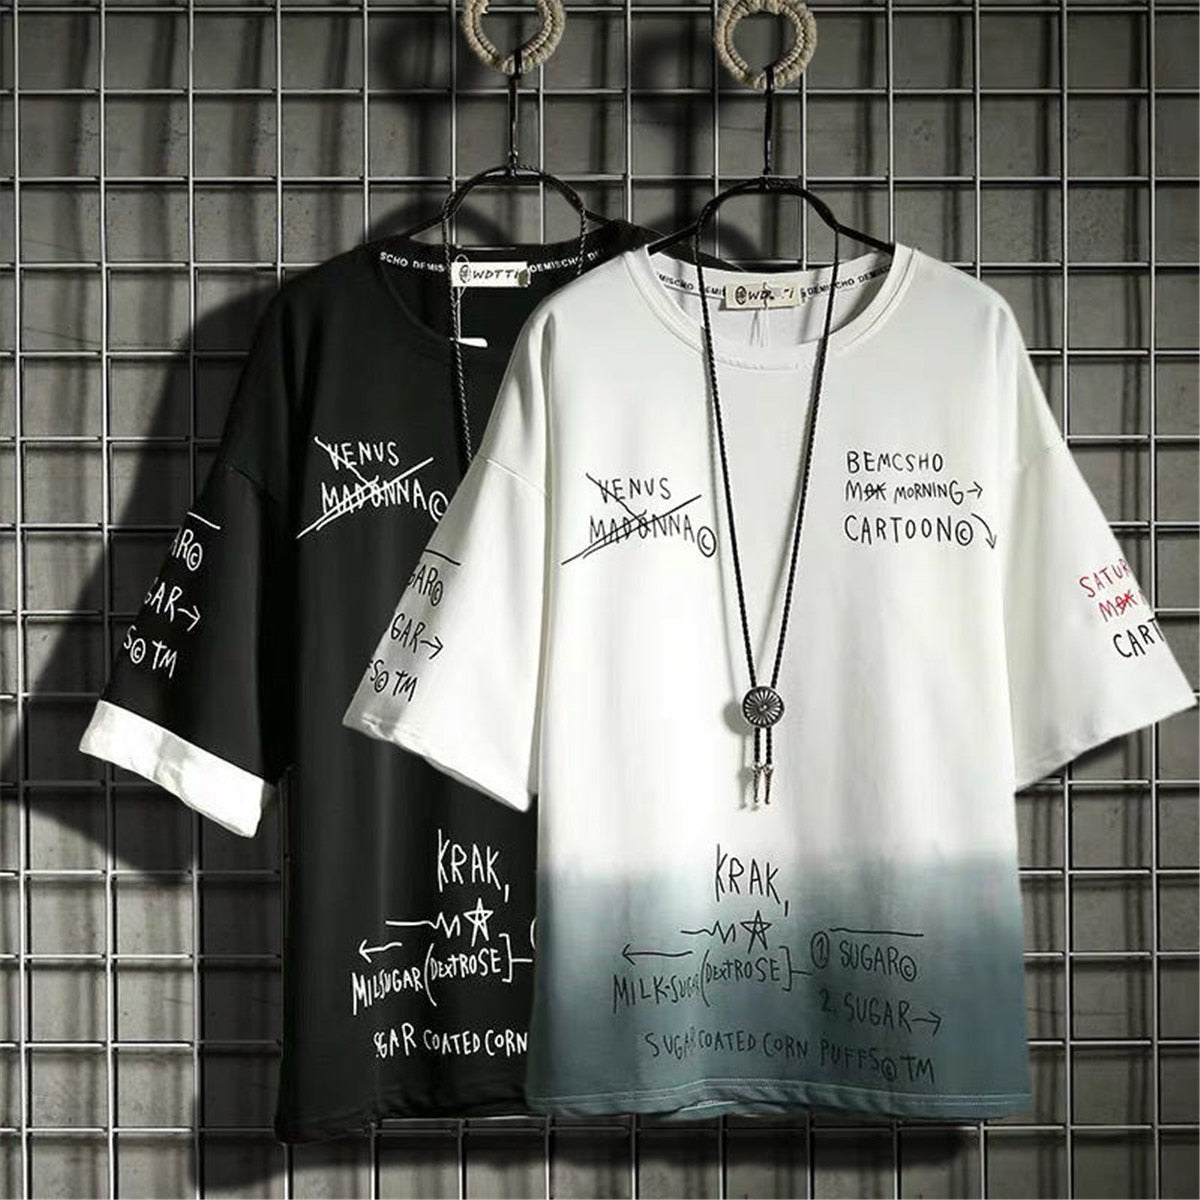 "Cool Inc" Unisex Men Women Streetwear Graphic T-Shirt Collection Daulet Apparel